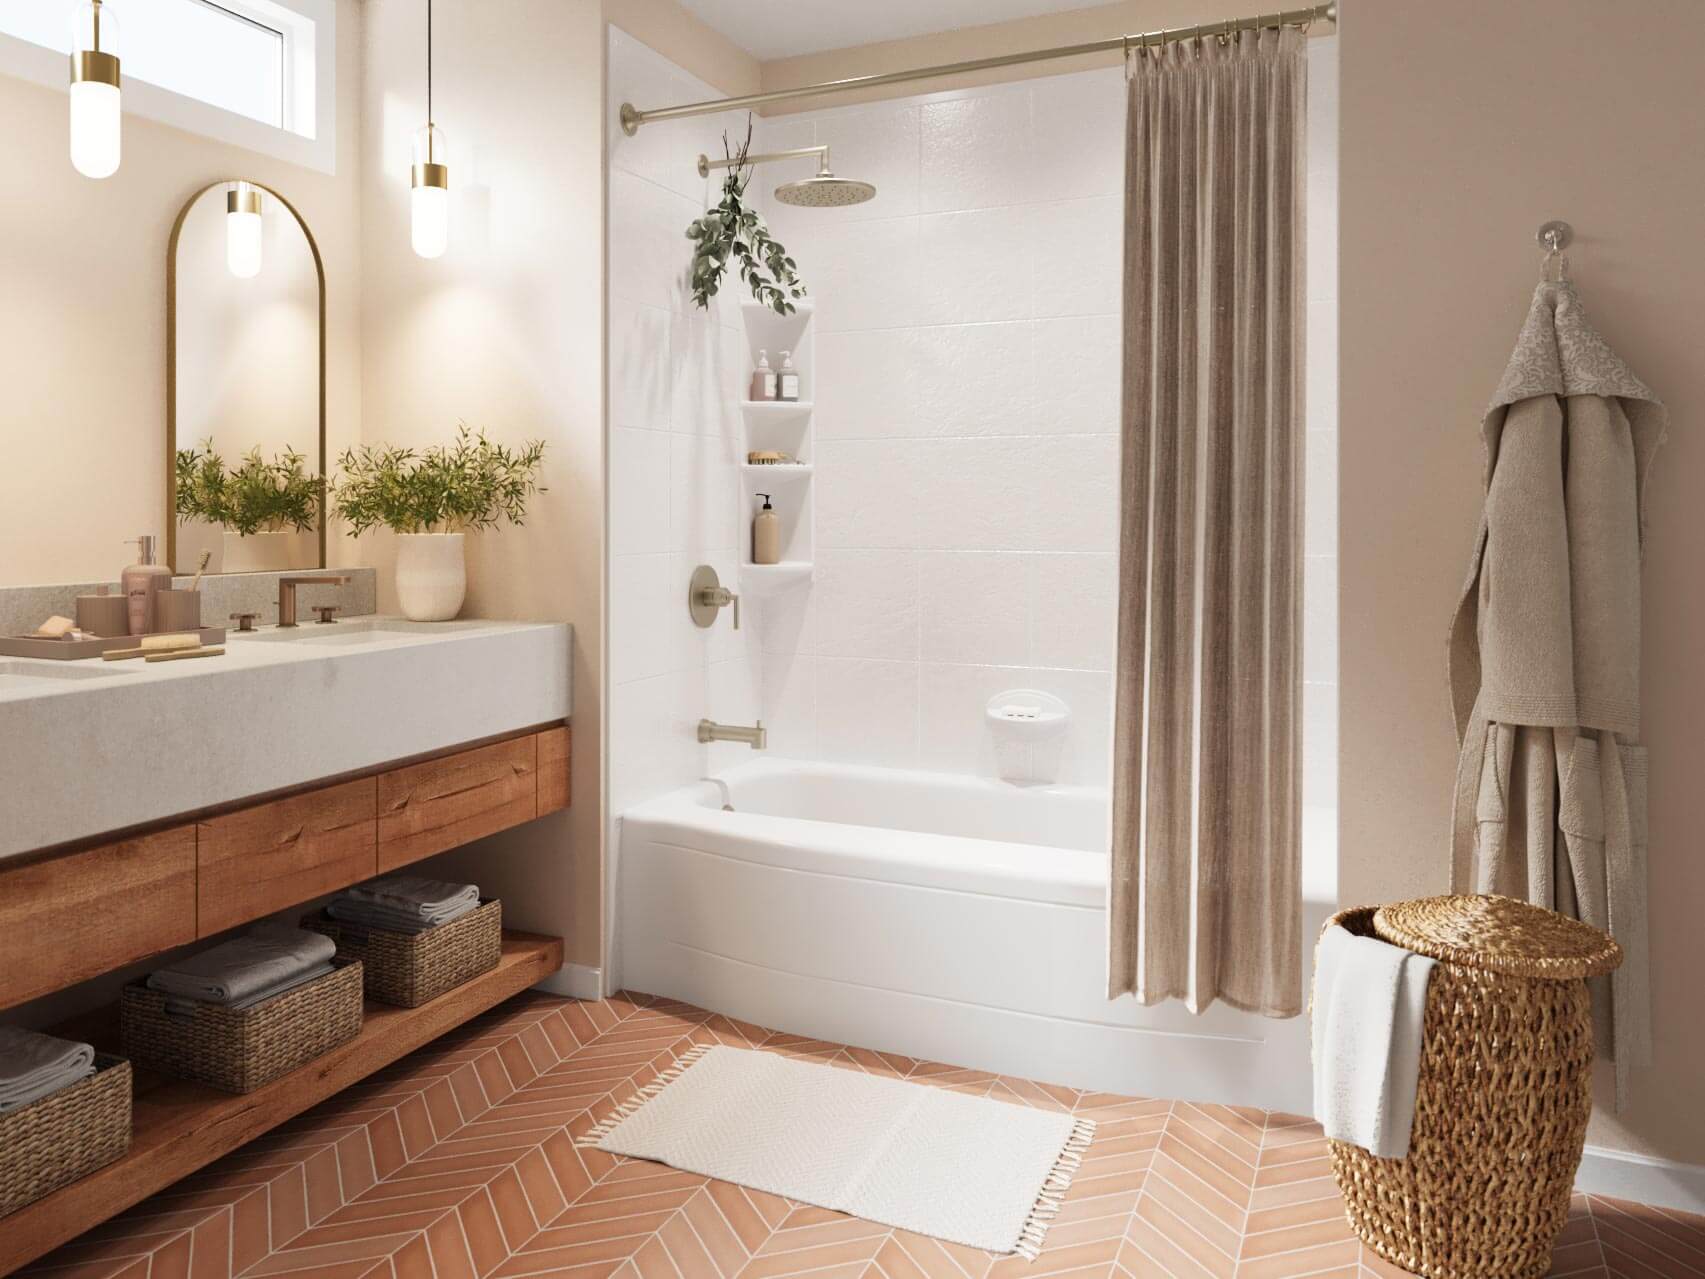 https://www.bathfitter.com/wp-content/uploads/2022/12/mediterranean-inspirted-bathroom-with-white-bathtub-1705x1279-1.jpg